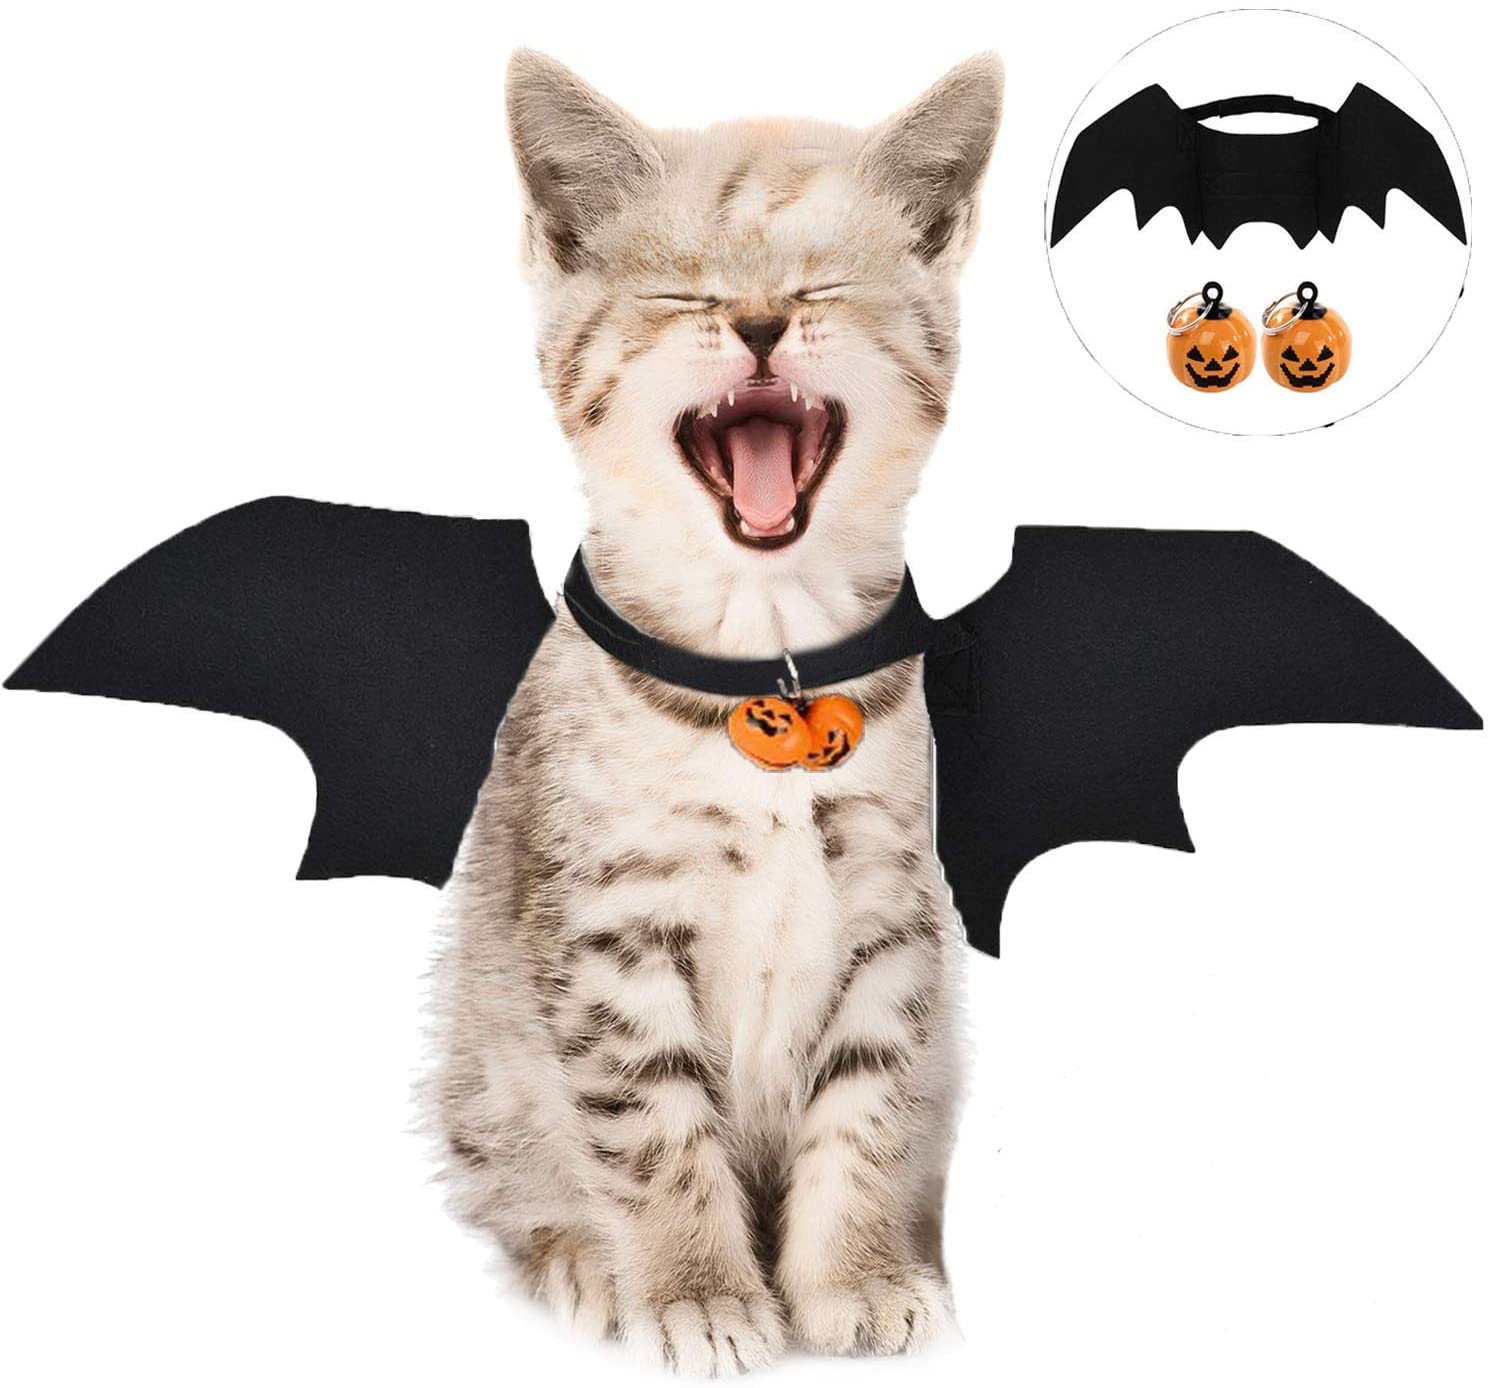  LIZHIGE Pet Costume Bat Wings, 1Pc Pet Halloween Bat Wings Disfraz, Gato Perro Cool Bat Wings Cosplay Accesorio para Halloween Holiday Theme Party, 2Pc Campana de Calabaza 